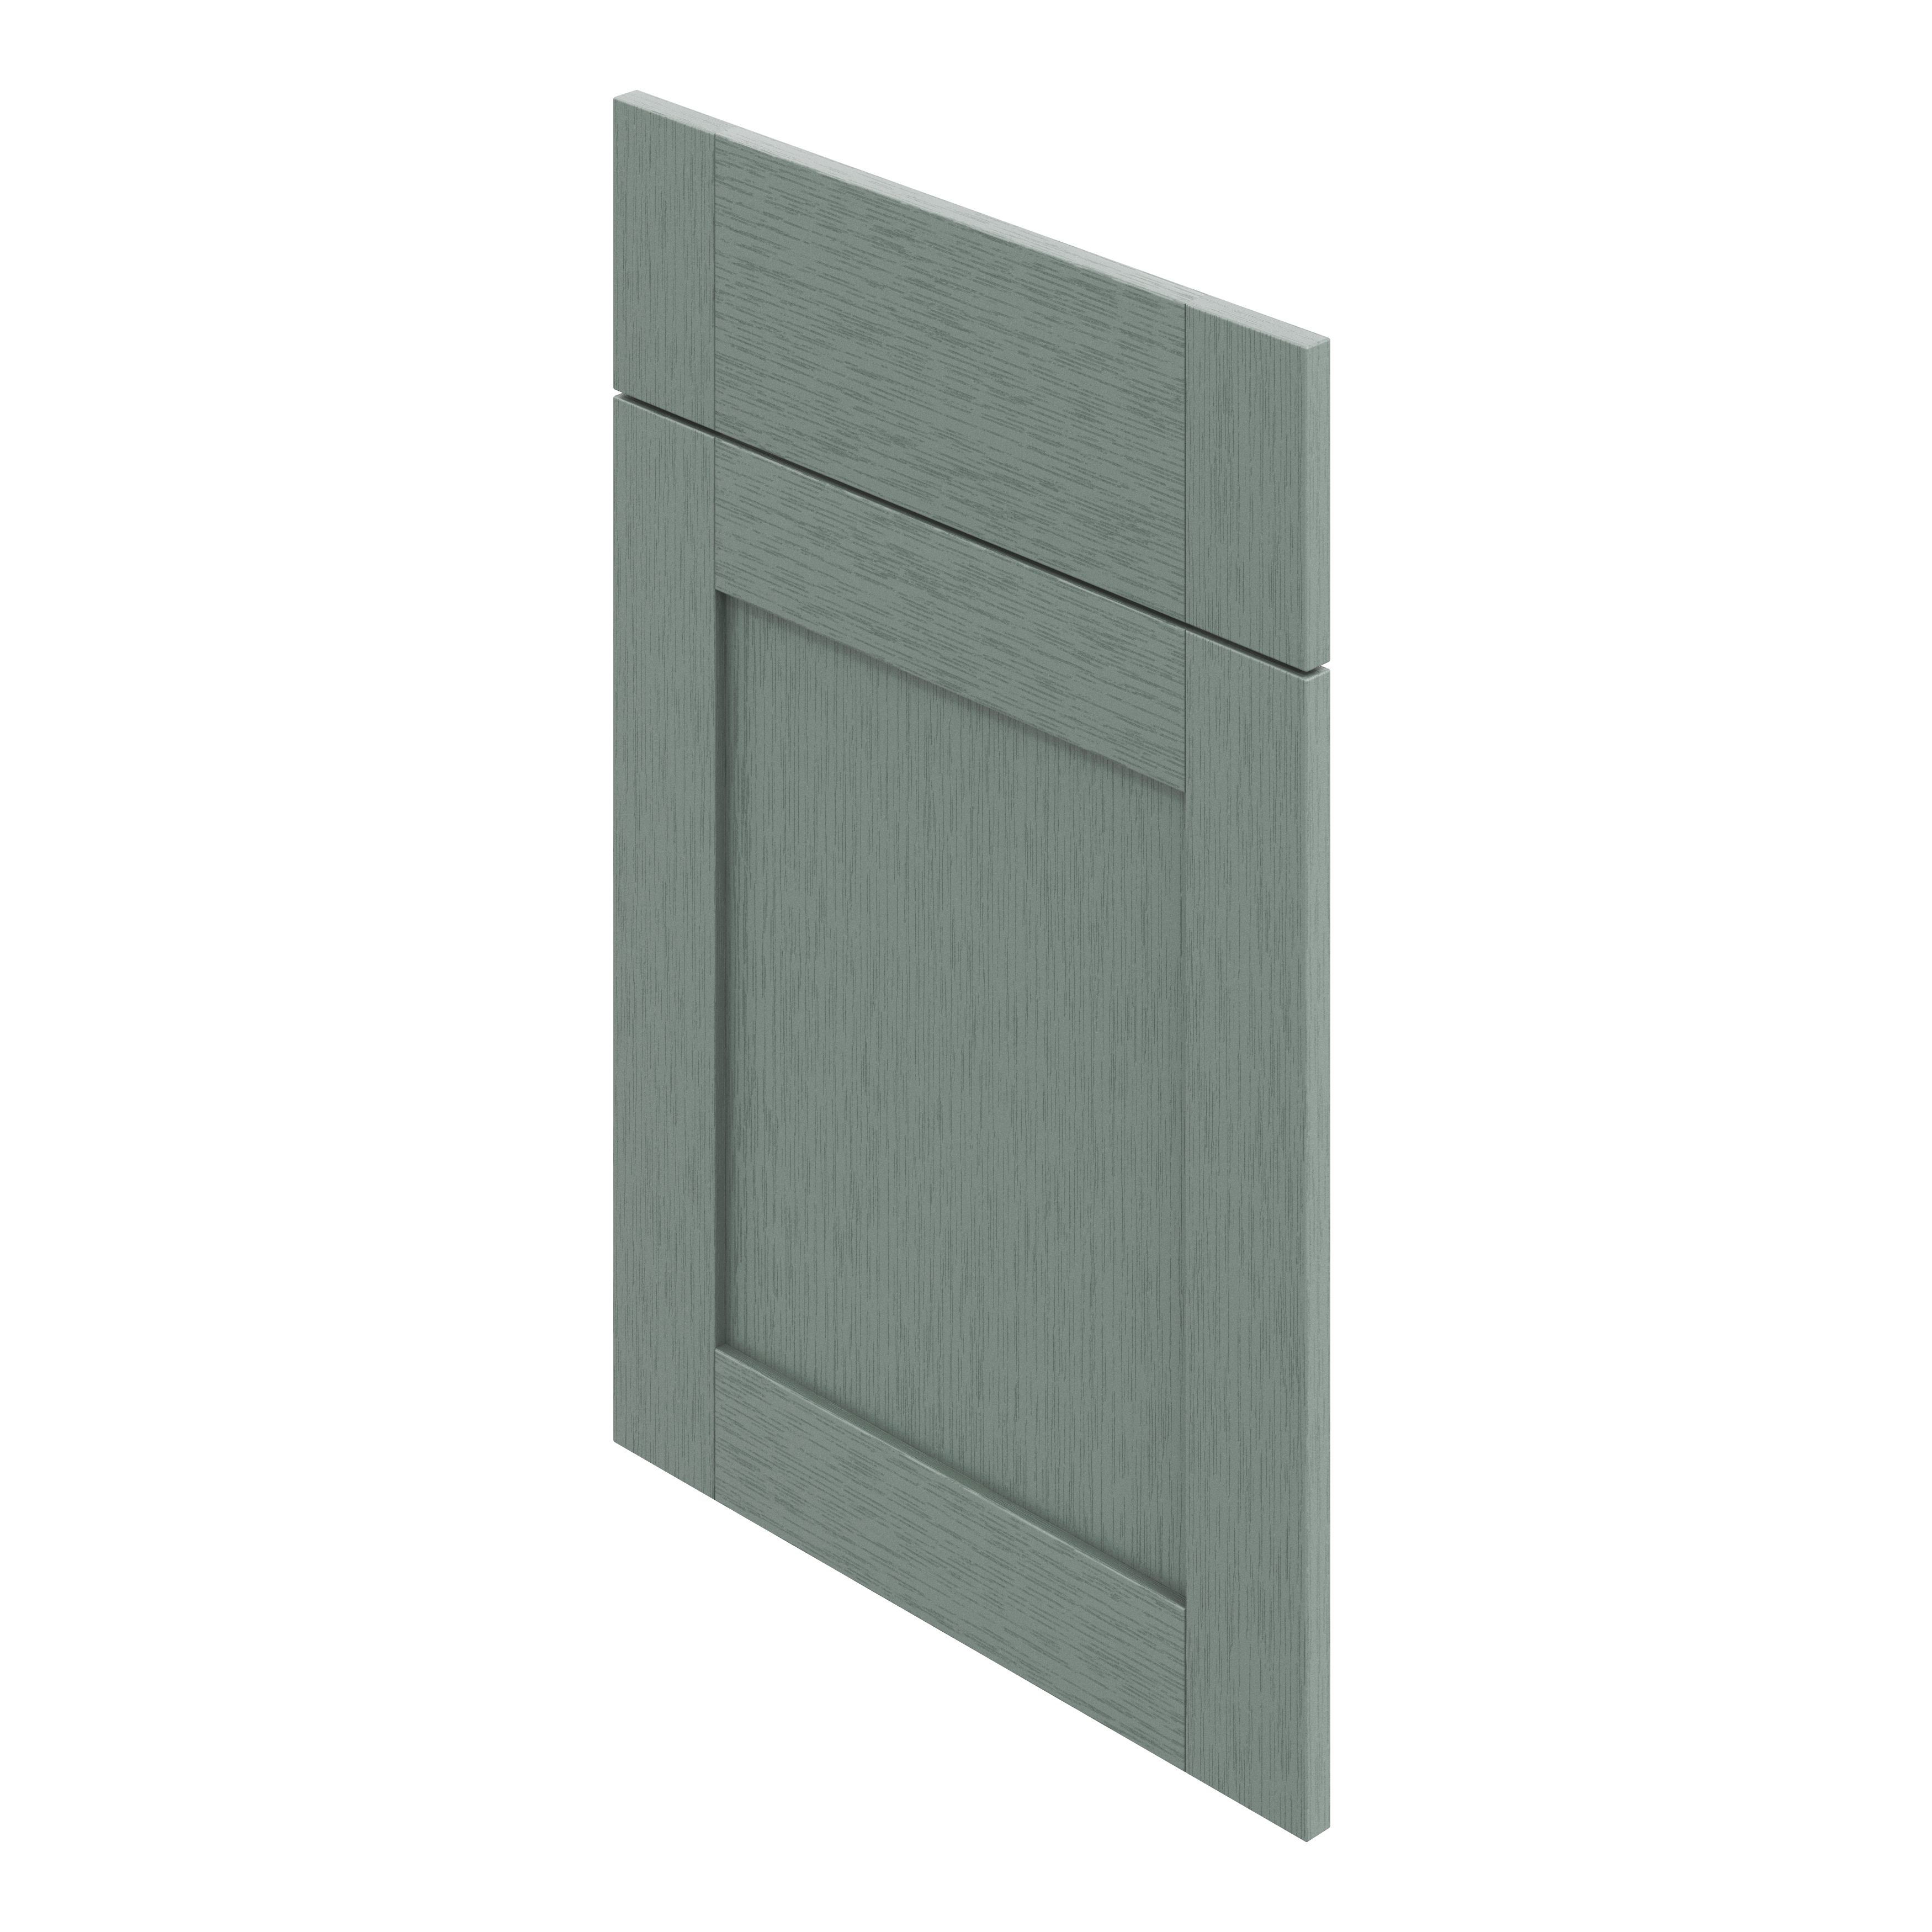 GoodHome Alpinia Matt green wood effect Drawerline door & drawer front, (W)500mm (H)715mm (T)18mm